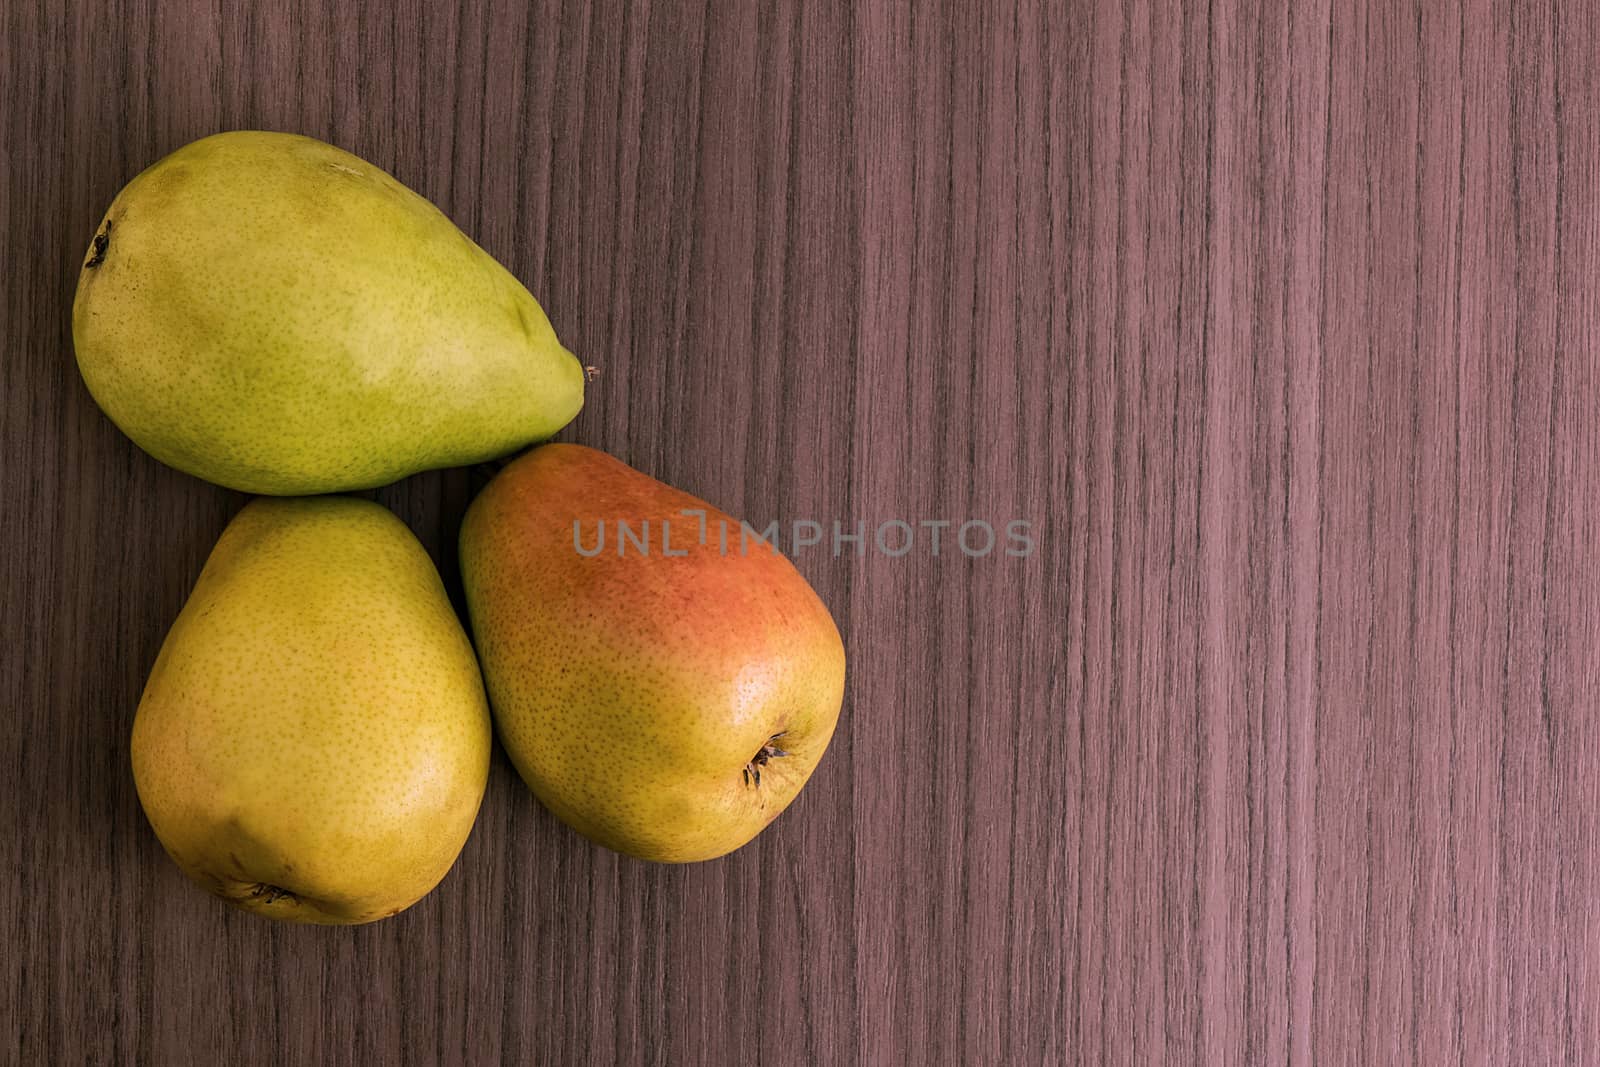 Ripe pears by dalomo84